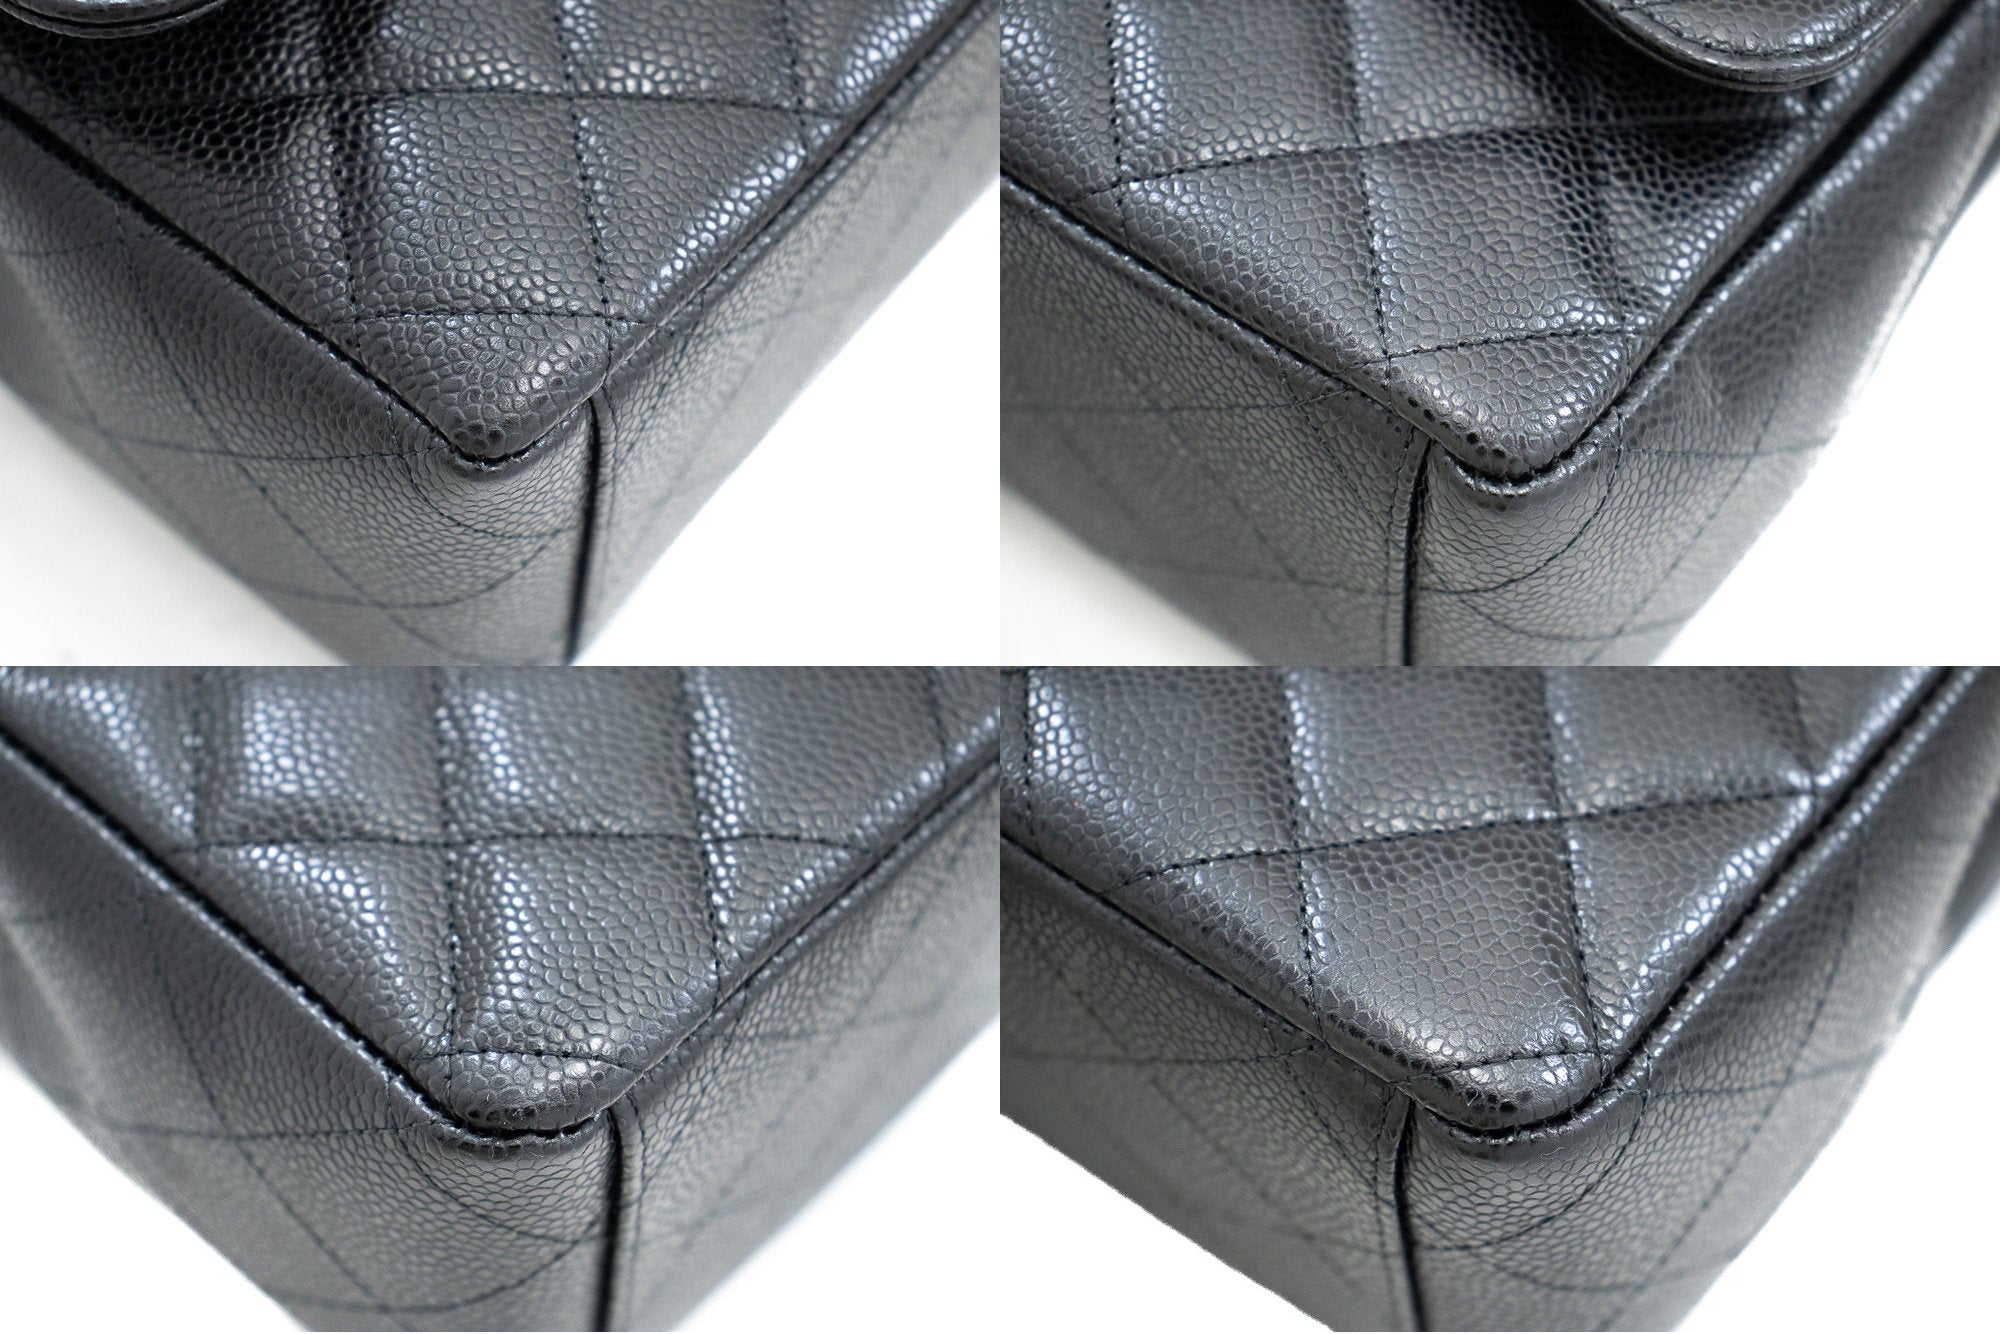 CHANEL - Mini Flap Bag with Top Handle Metallic Grained Calfskin